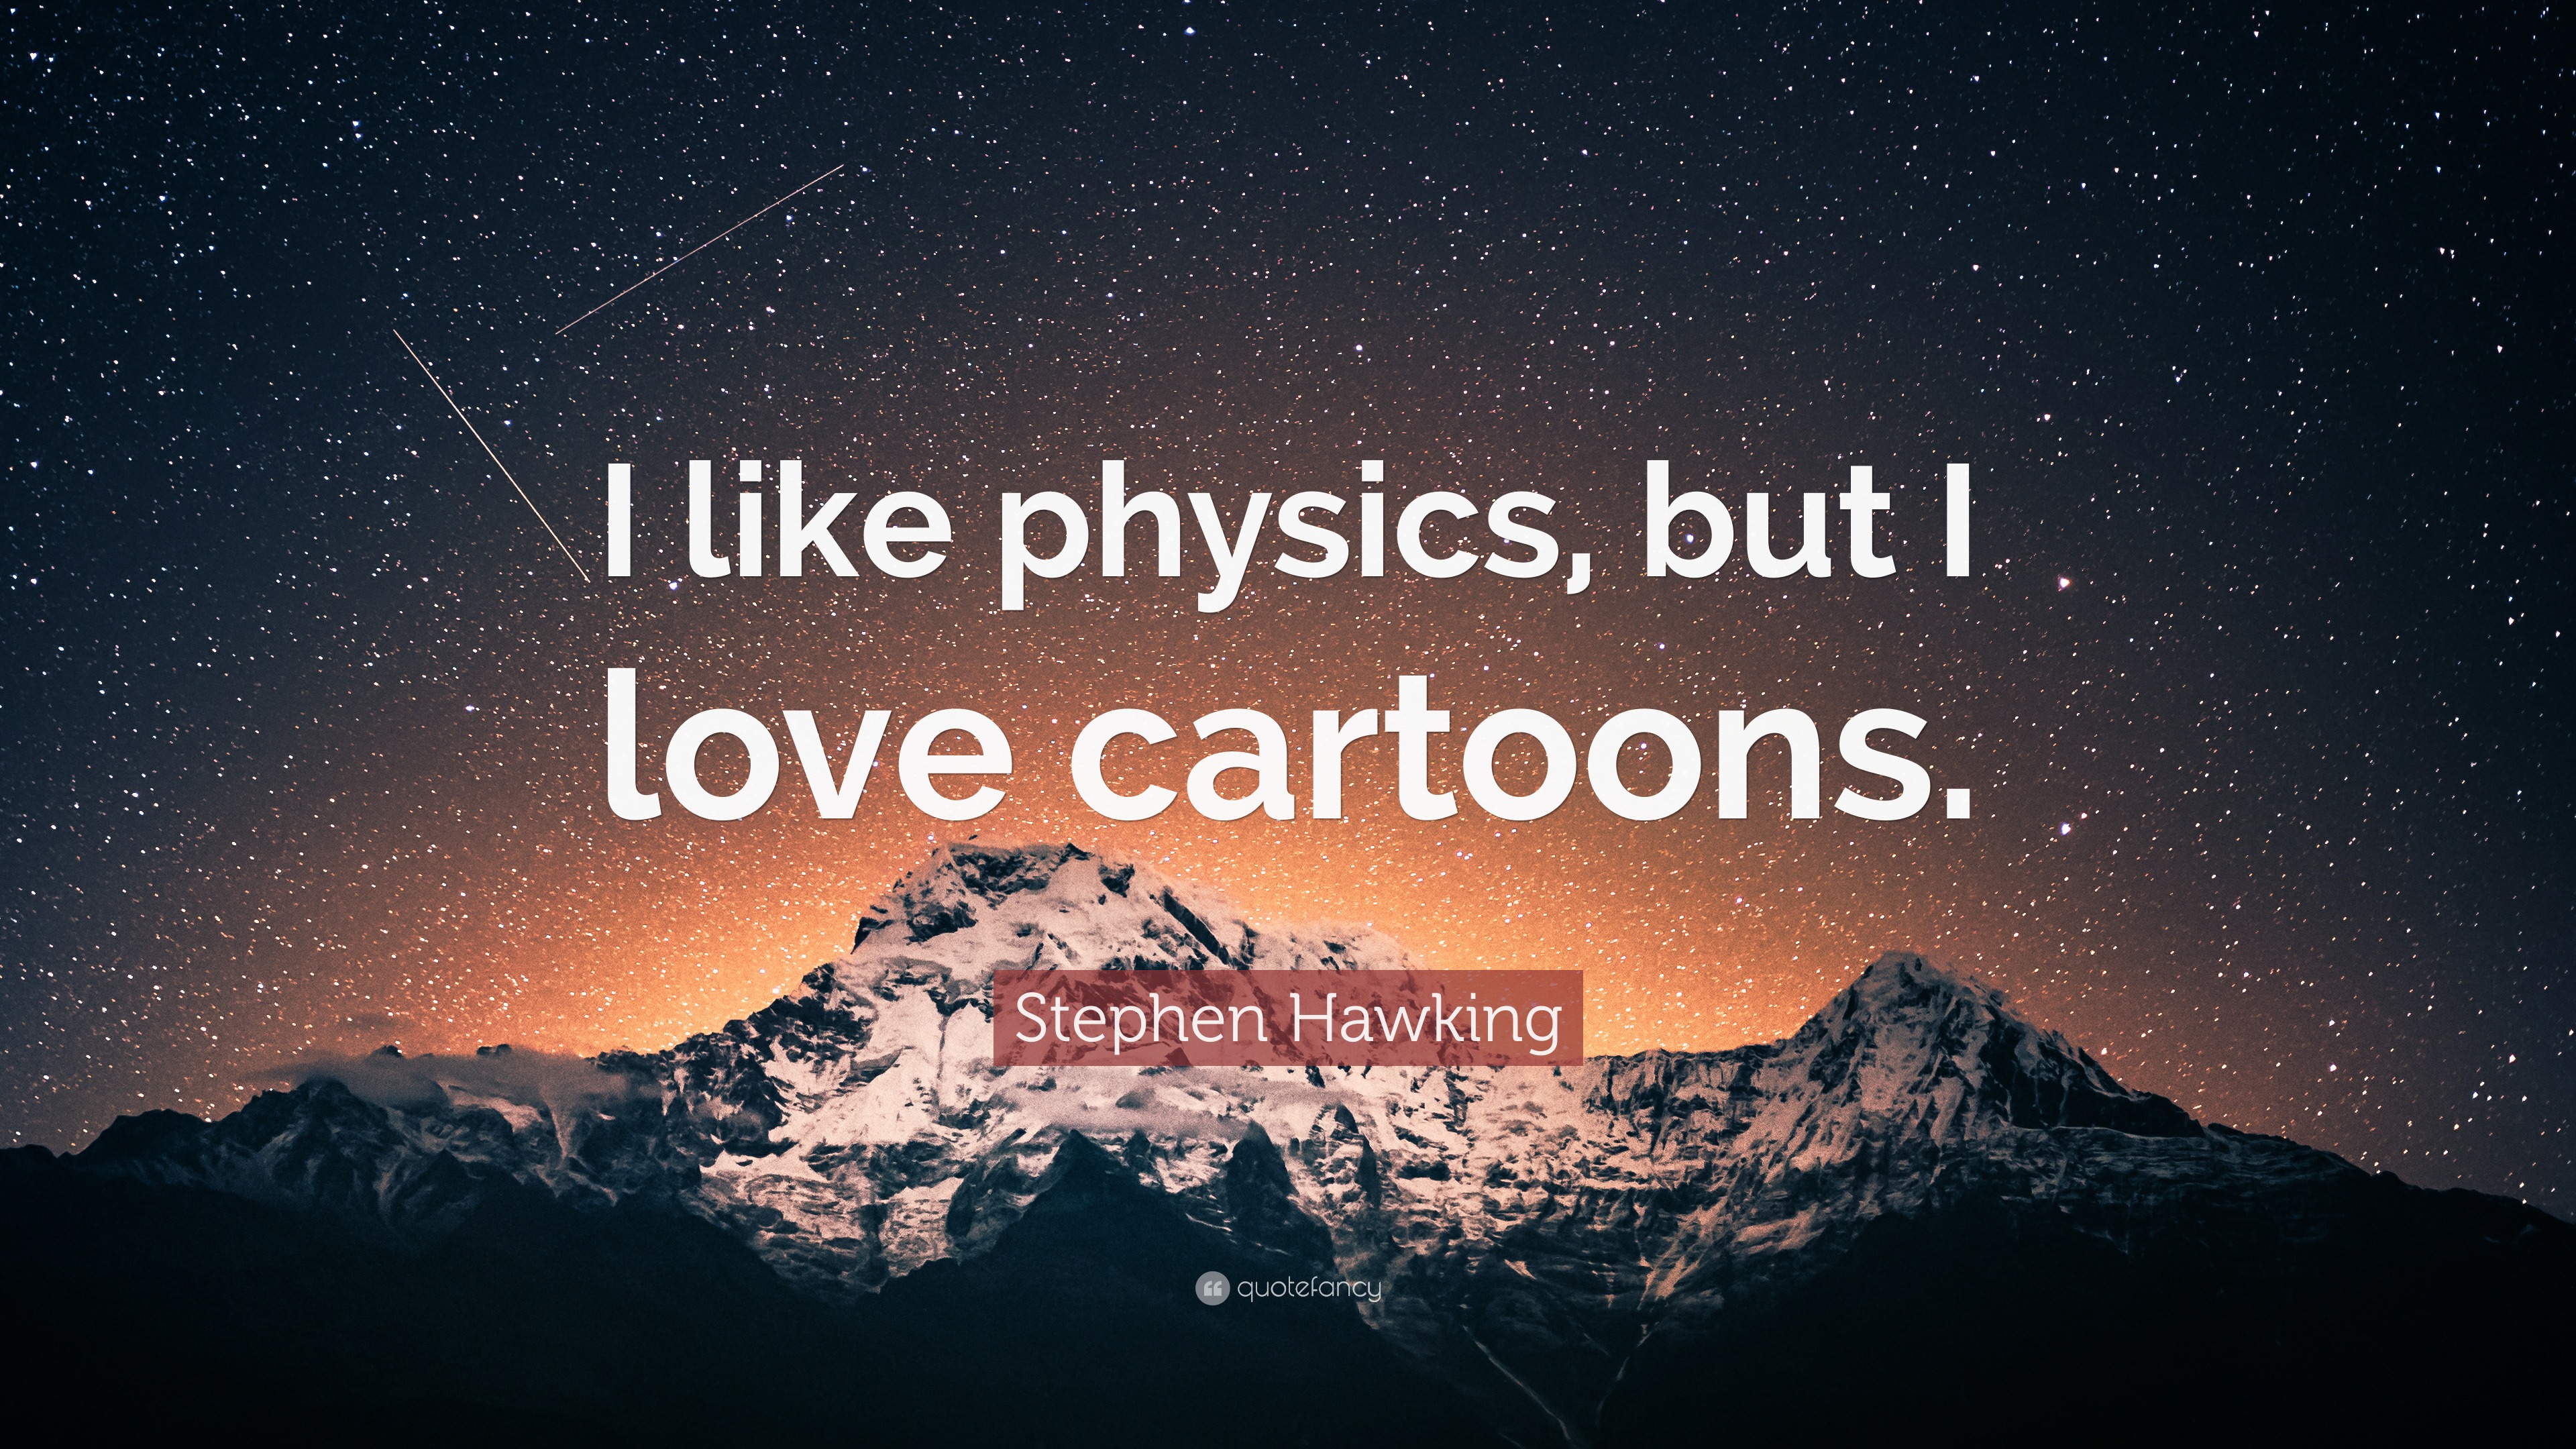 Stephen Hawking Quote: “I like physics, but I love cartoons.”